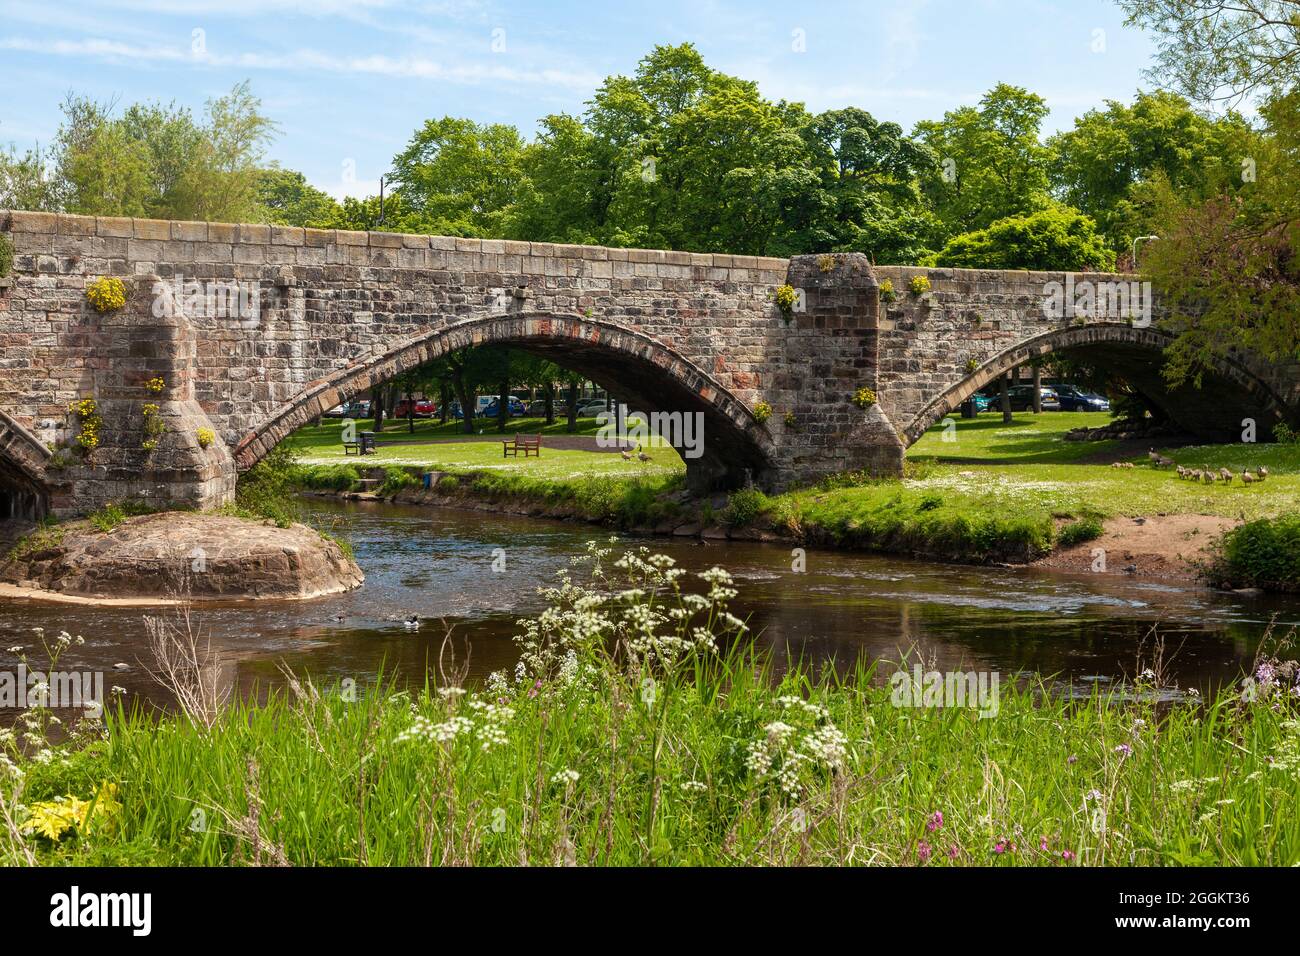 The Old Bridge (Roman Bridge) over the River Esk in Musselburgh, Scotland Stock Photo